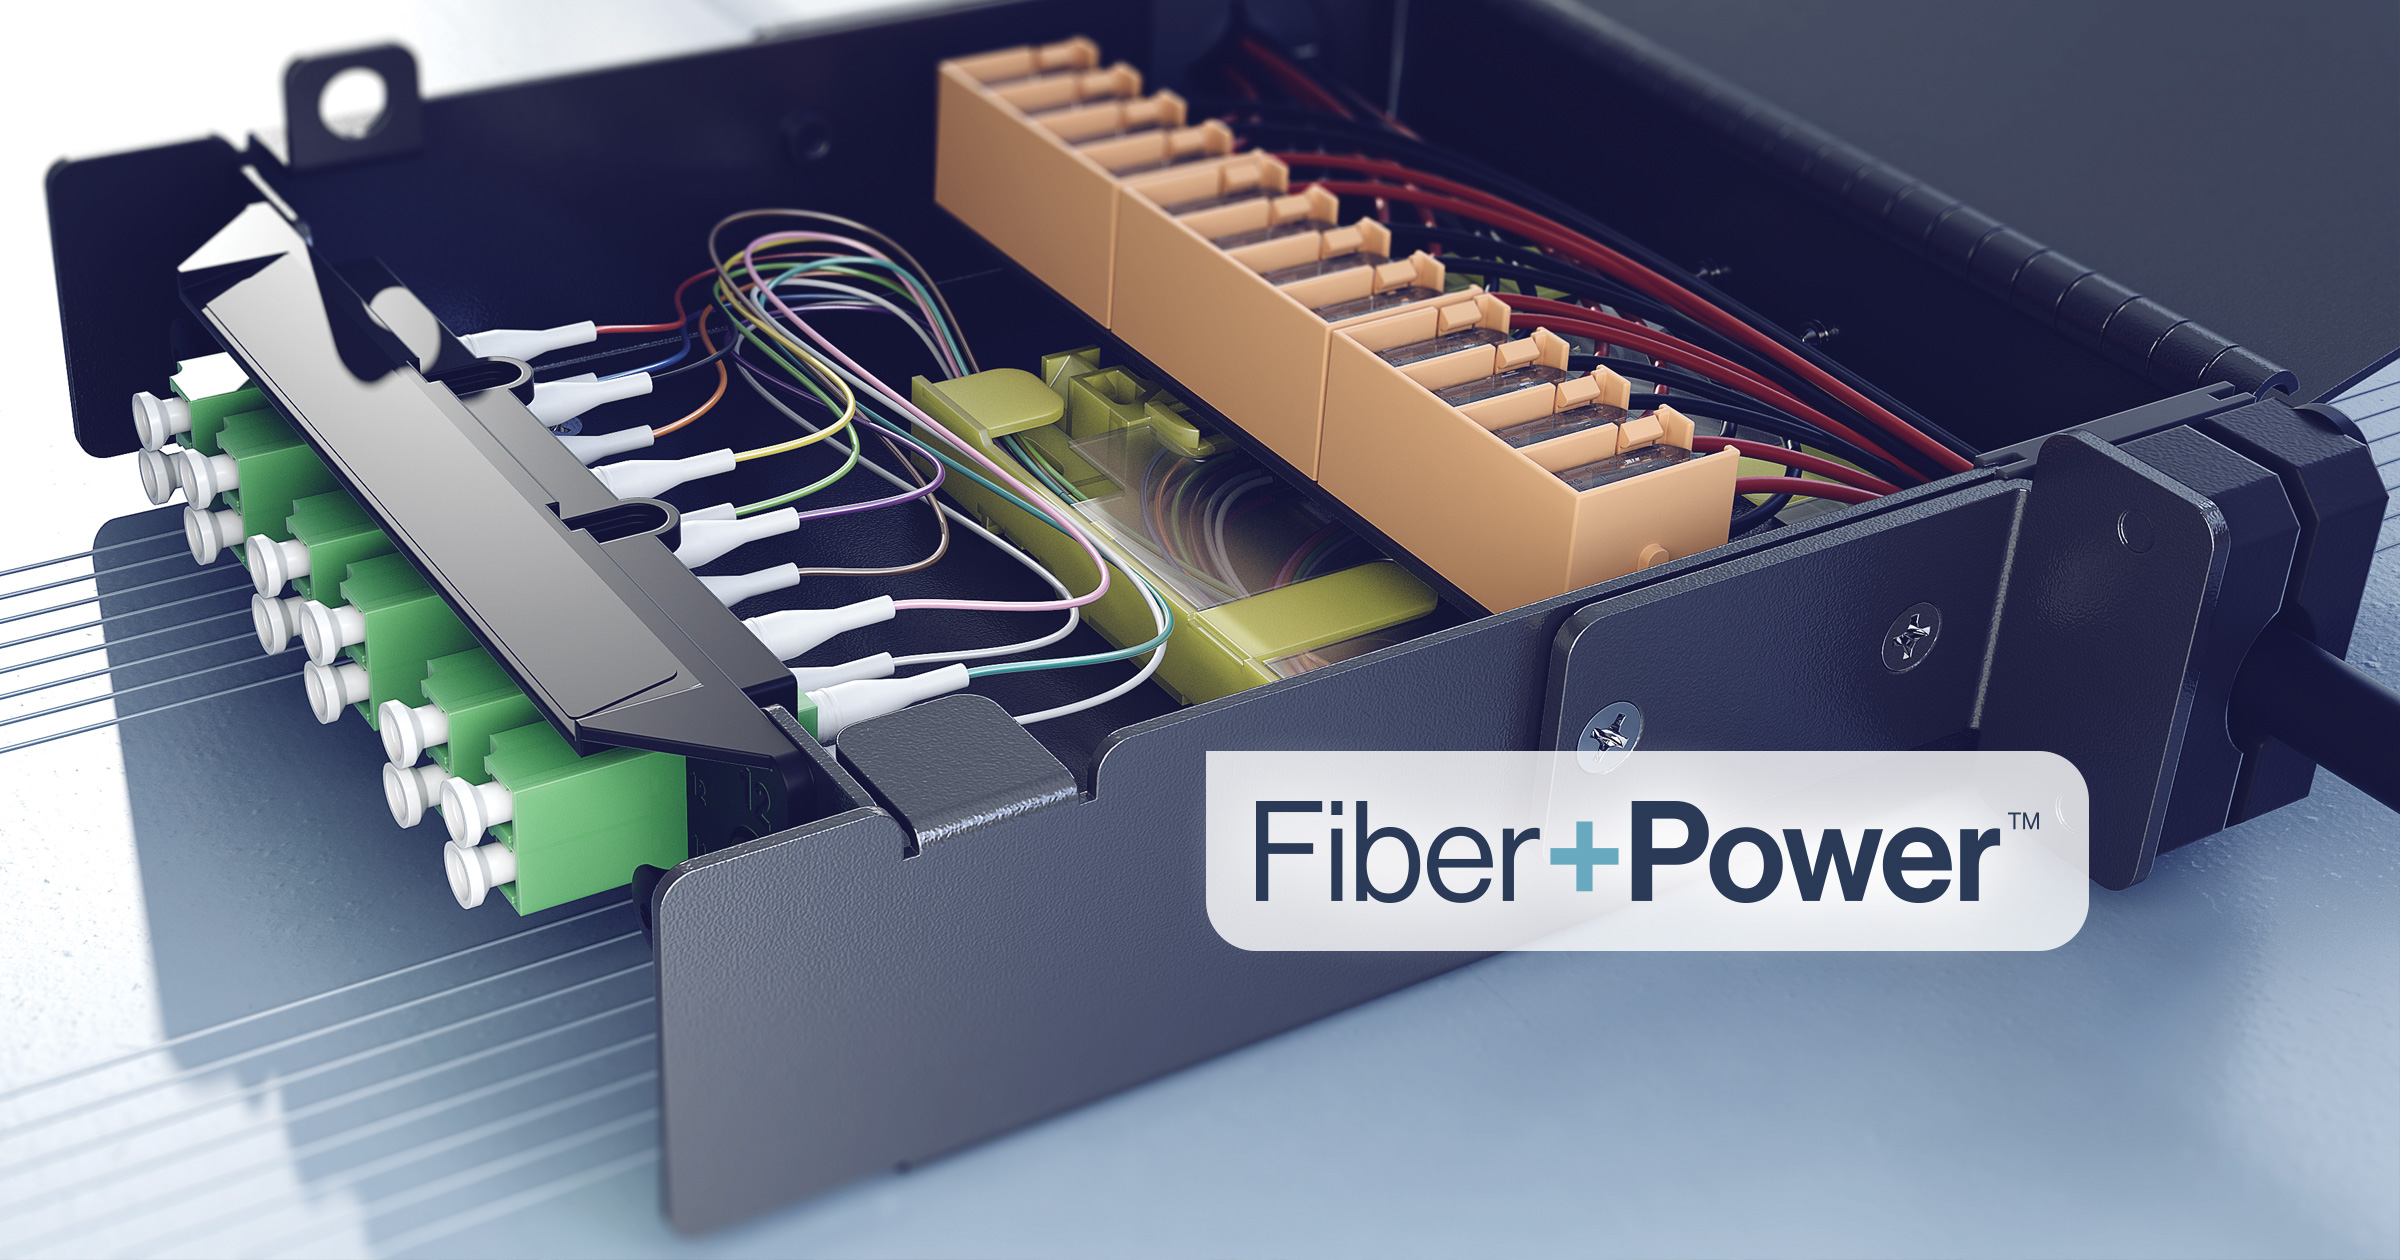 Powered Fiber Solutions for Smarter Network Densification